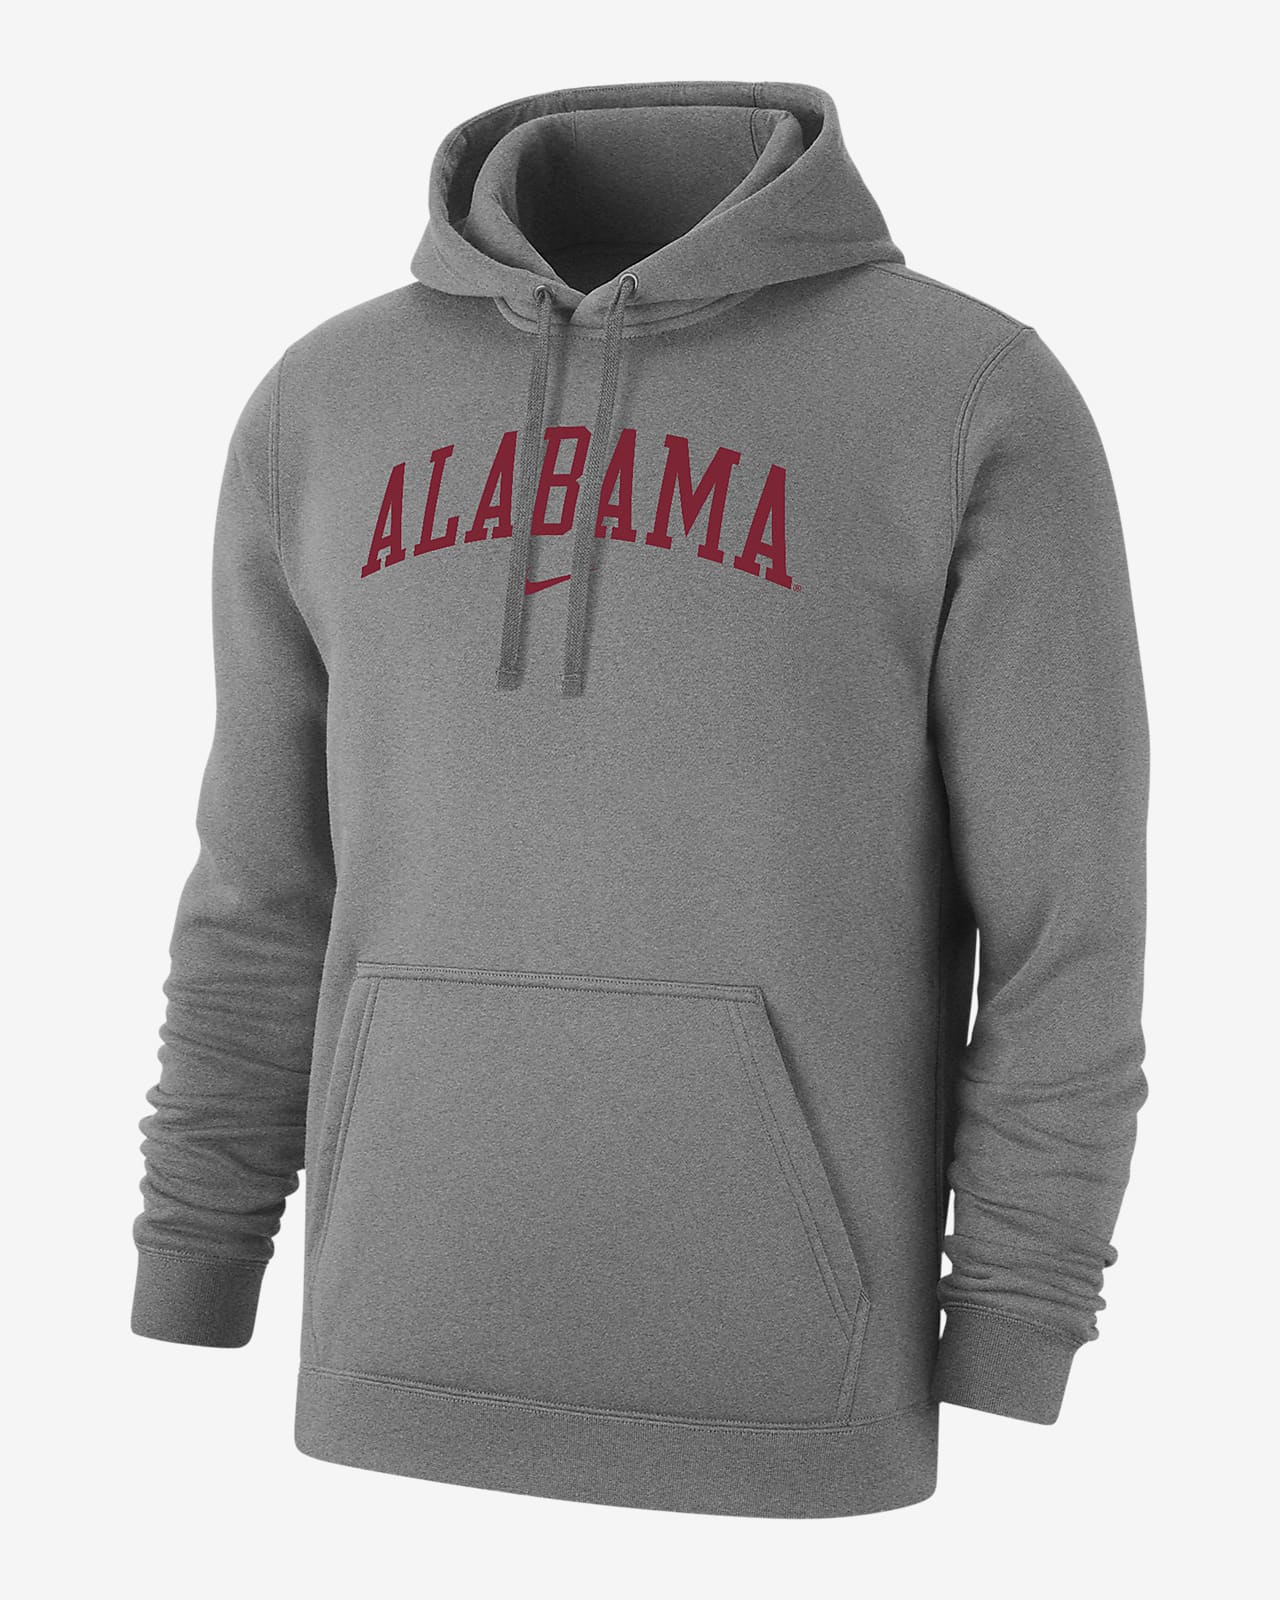 Alabama Club Fleece Men's Nike College Pullover Hoodie